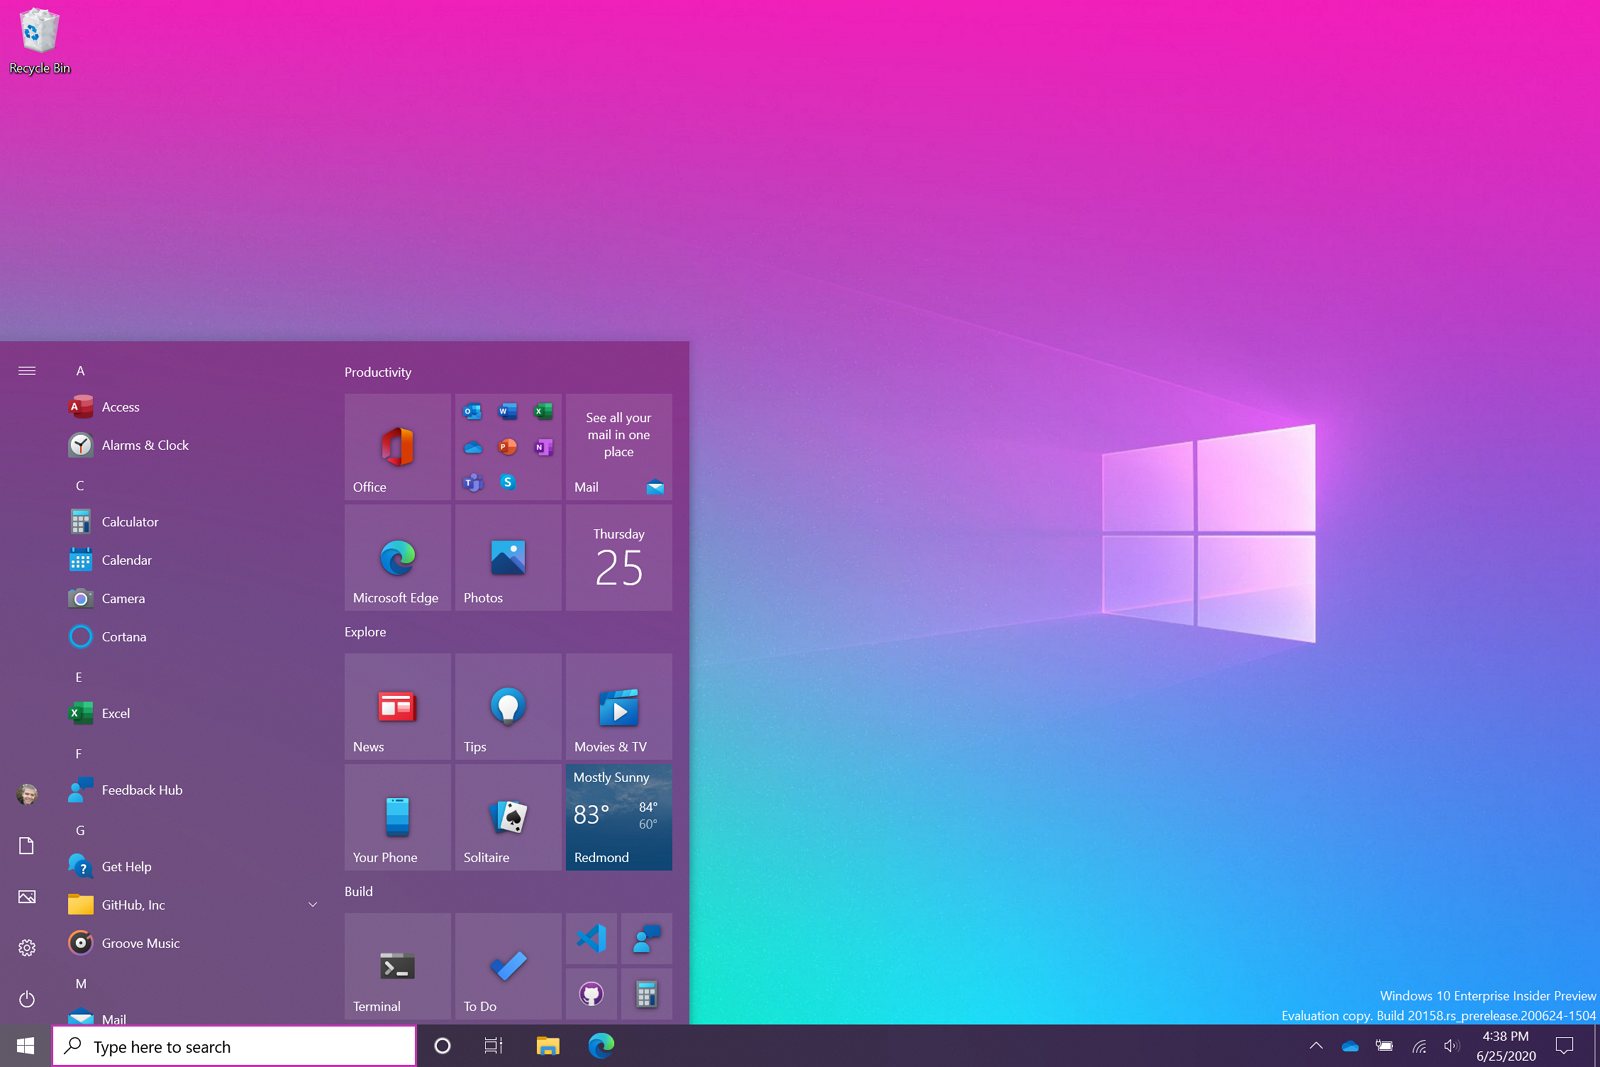 Windows 10 Start menu new design (Source: Microsoft)